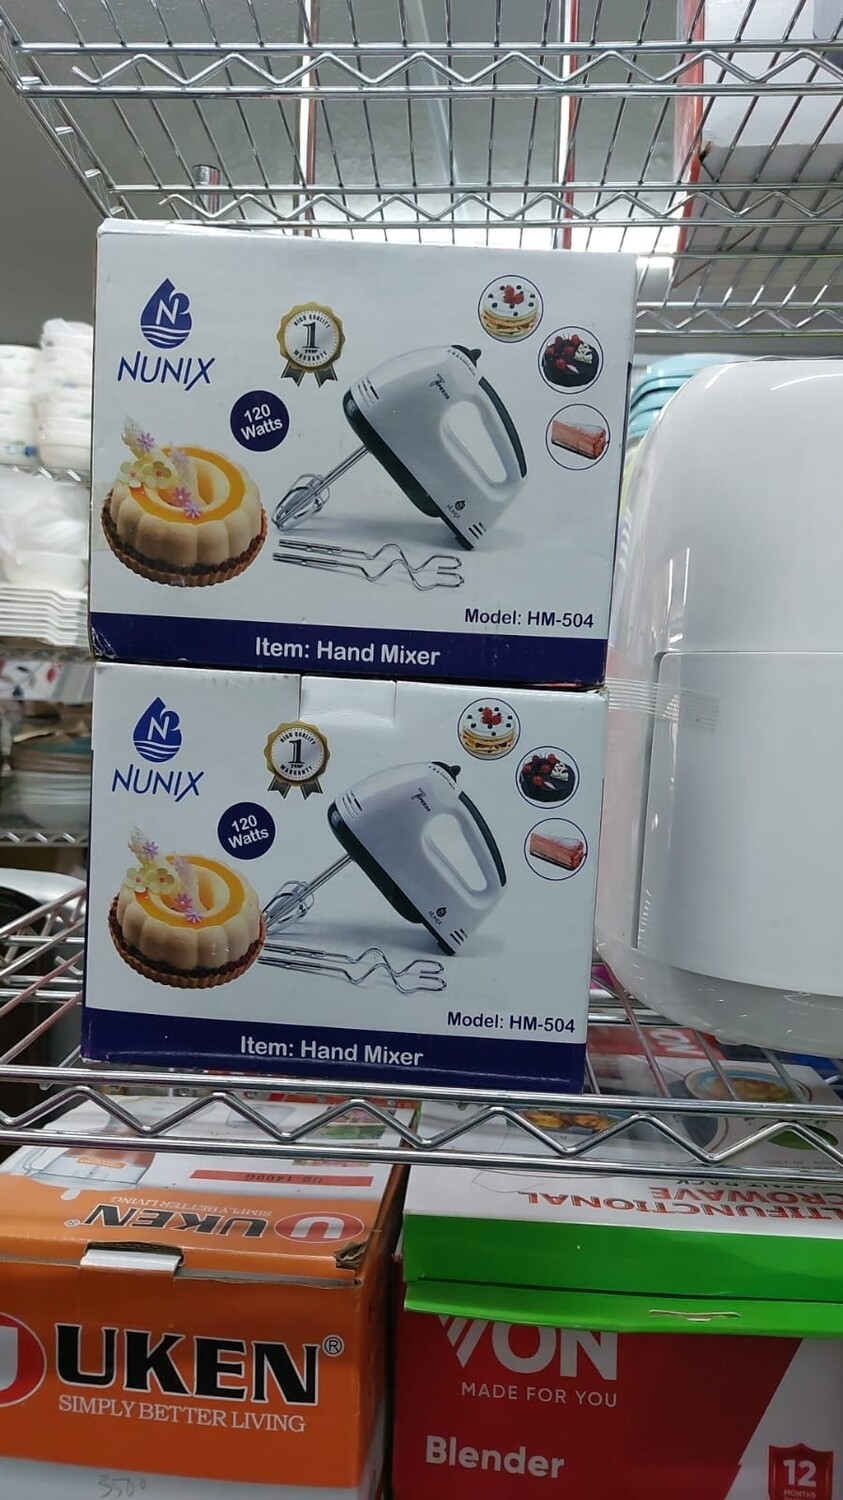 Nunix hand mixer